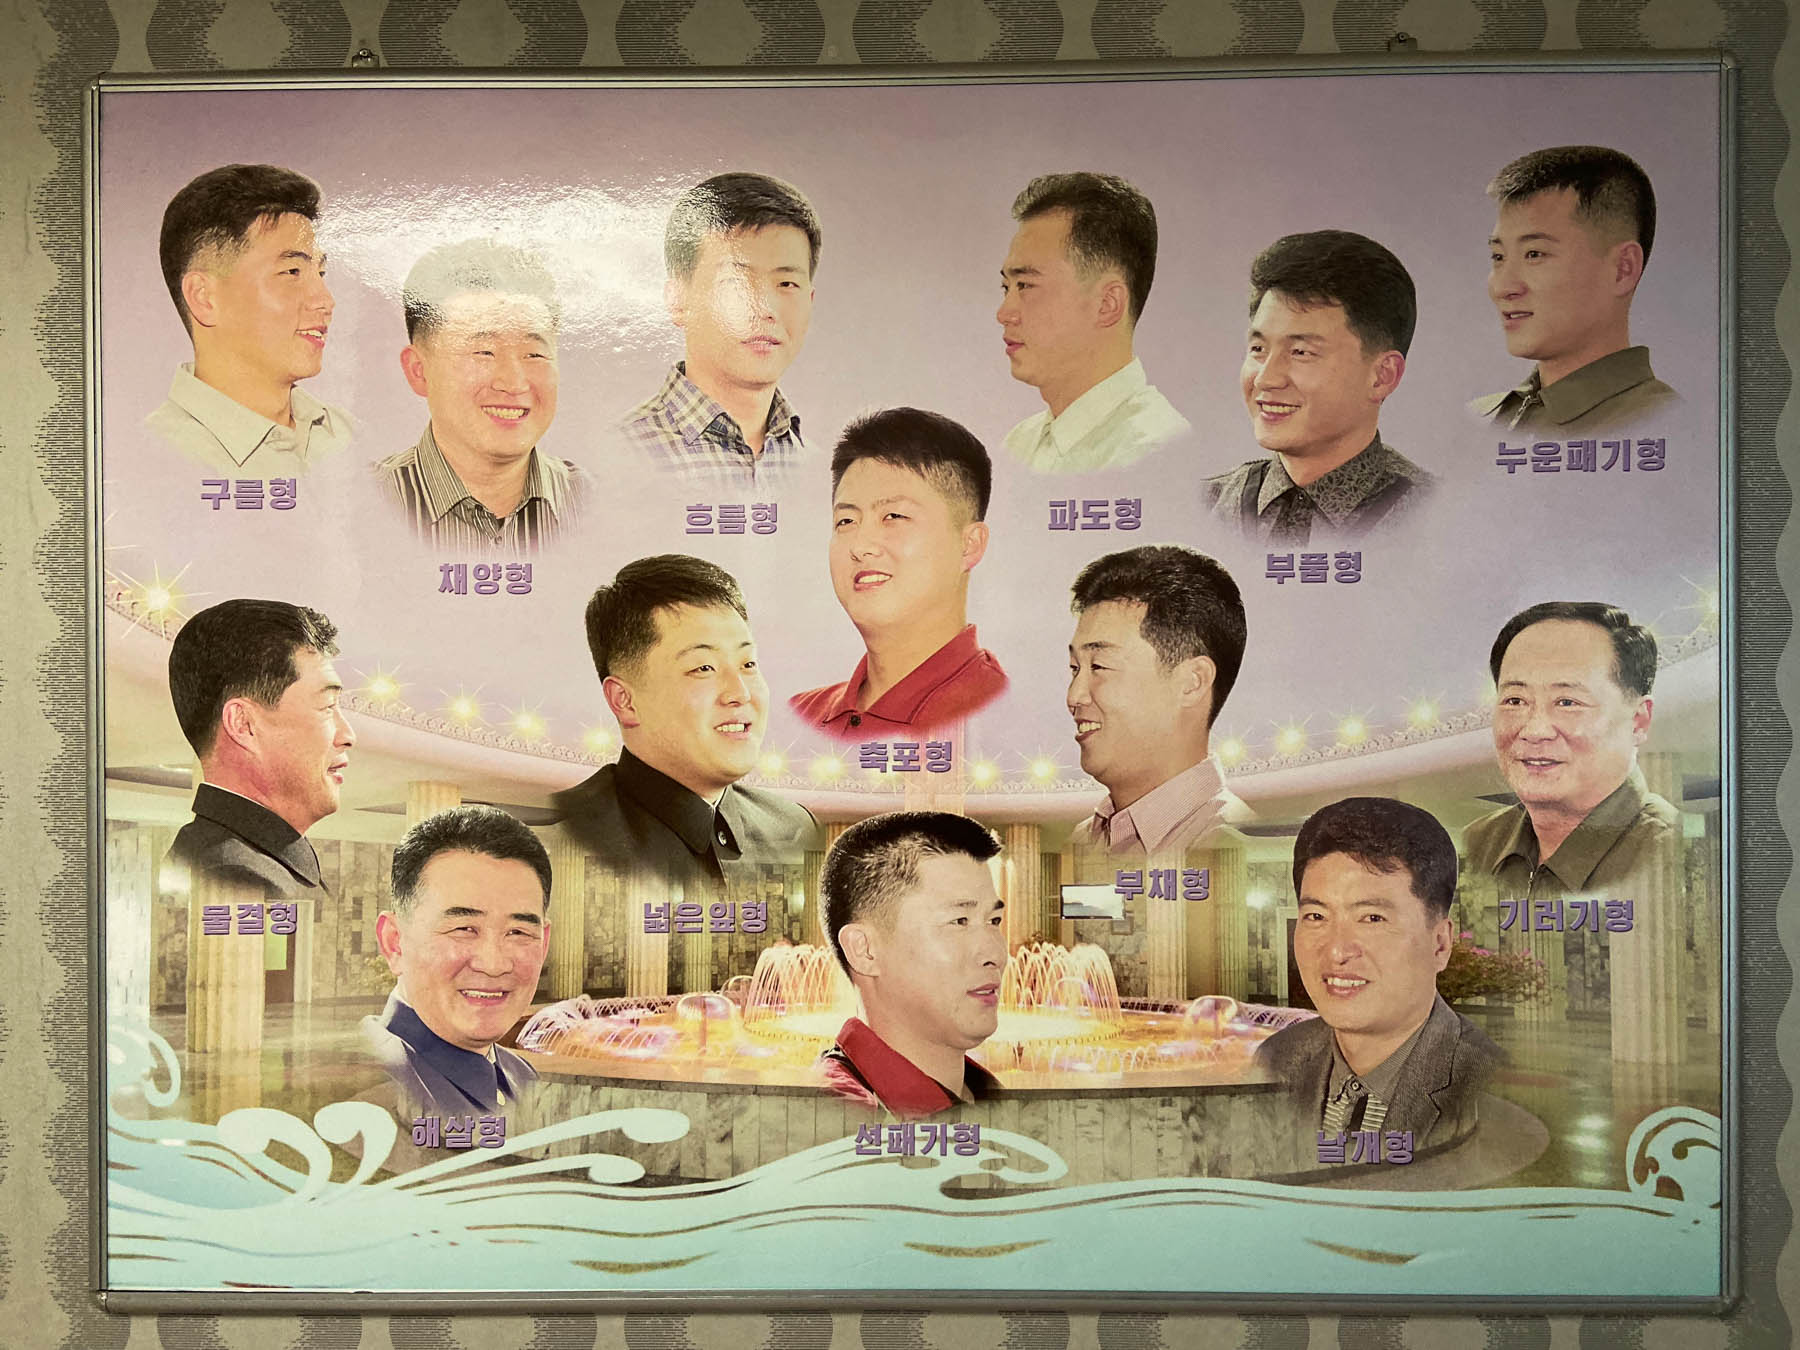 "Do you want a haircut as our Marshall Kim Jong Un?"